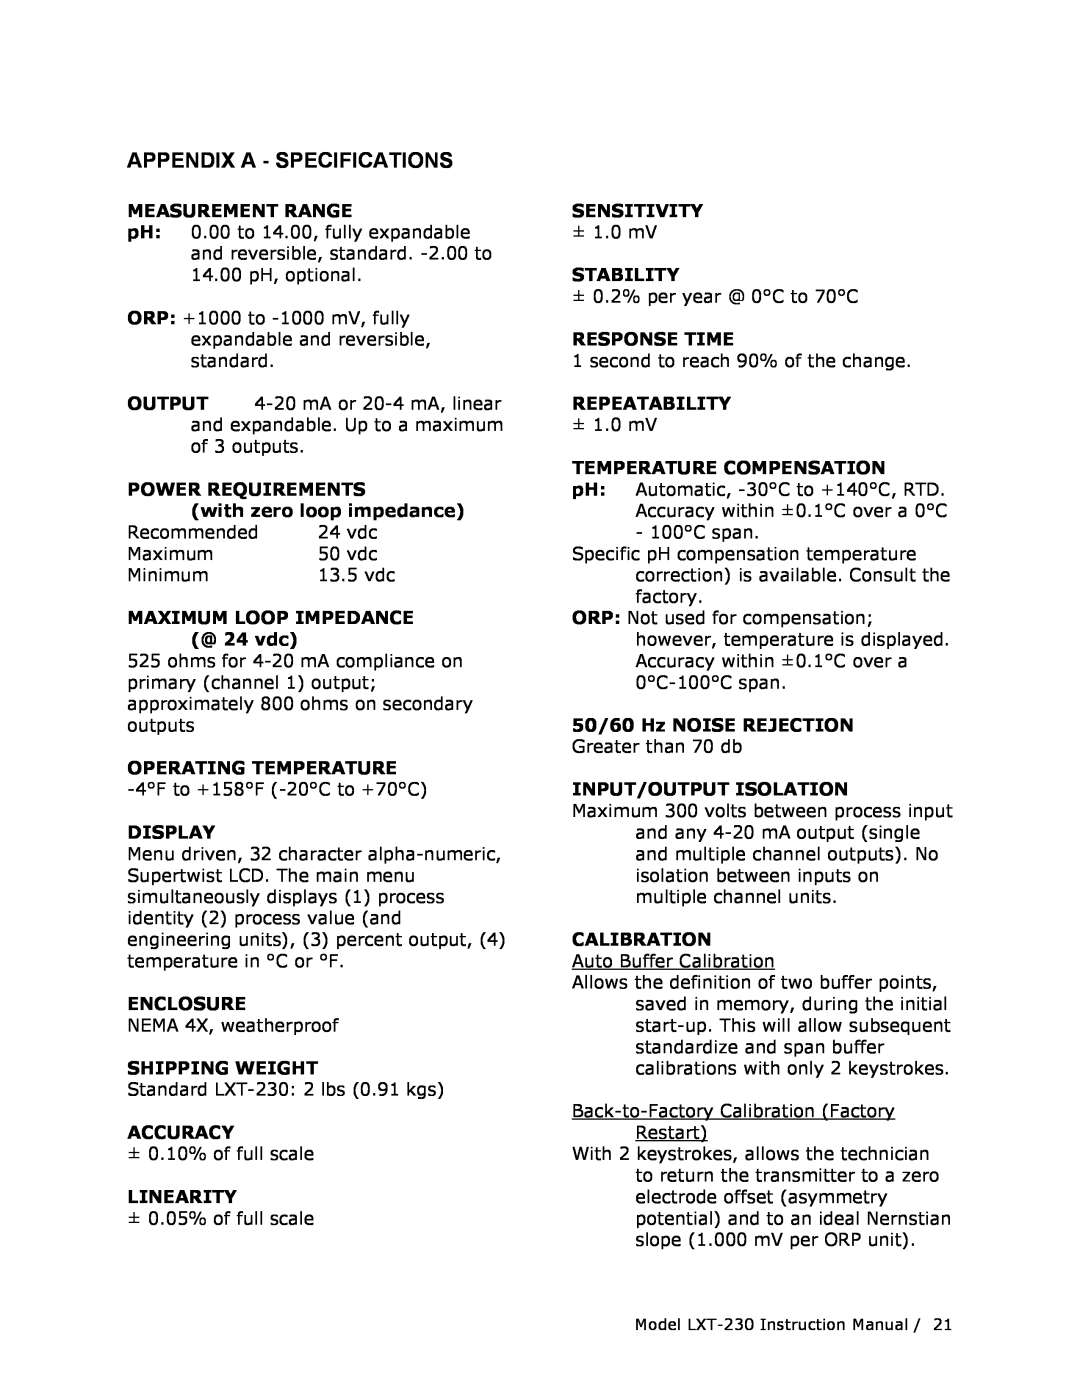 Teledyne LXT-230 manual Appendix A - Specifications 